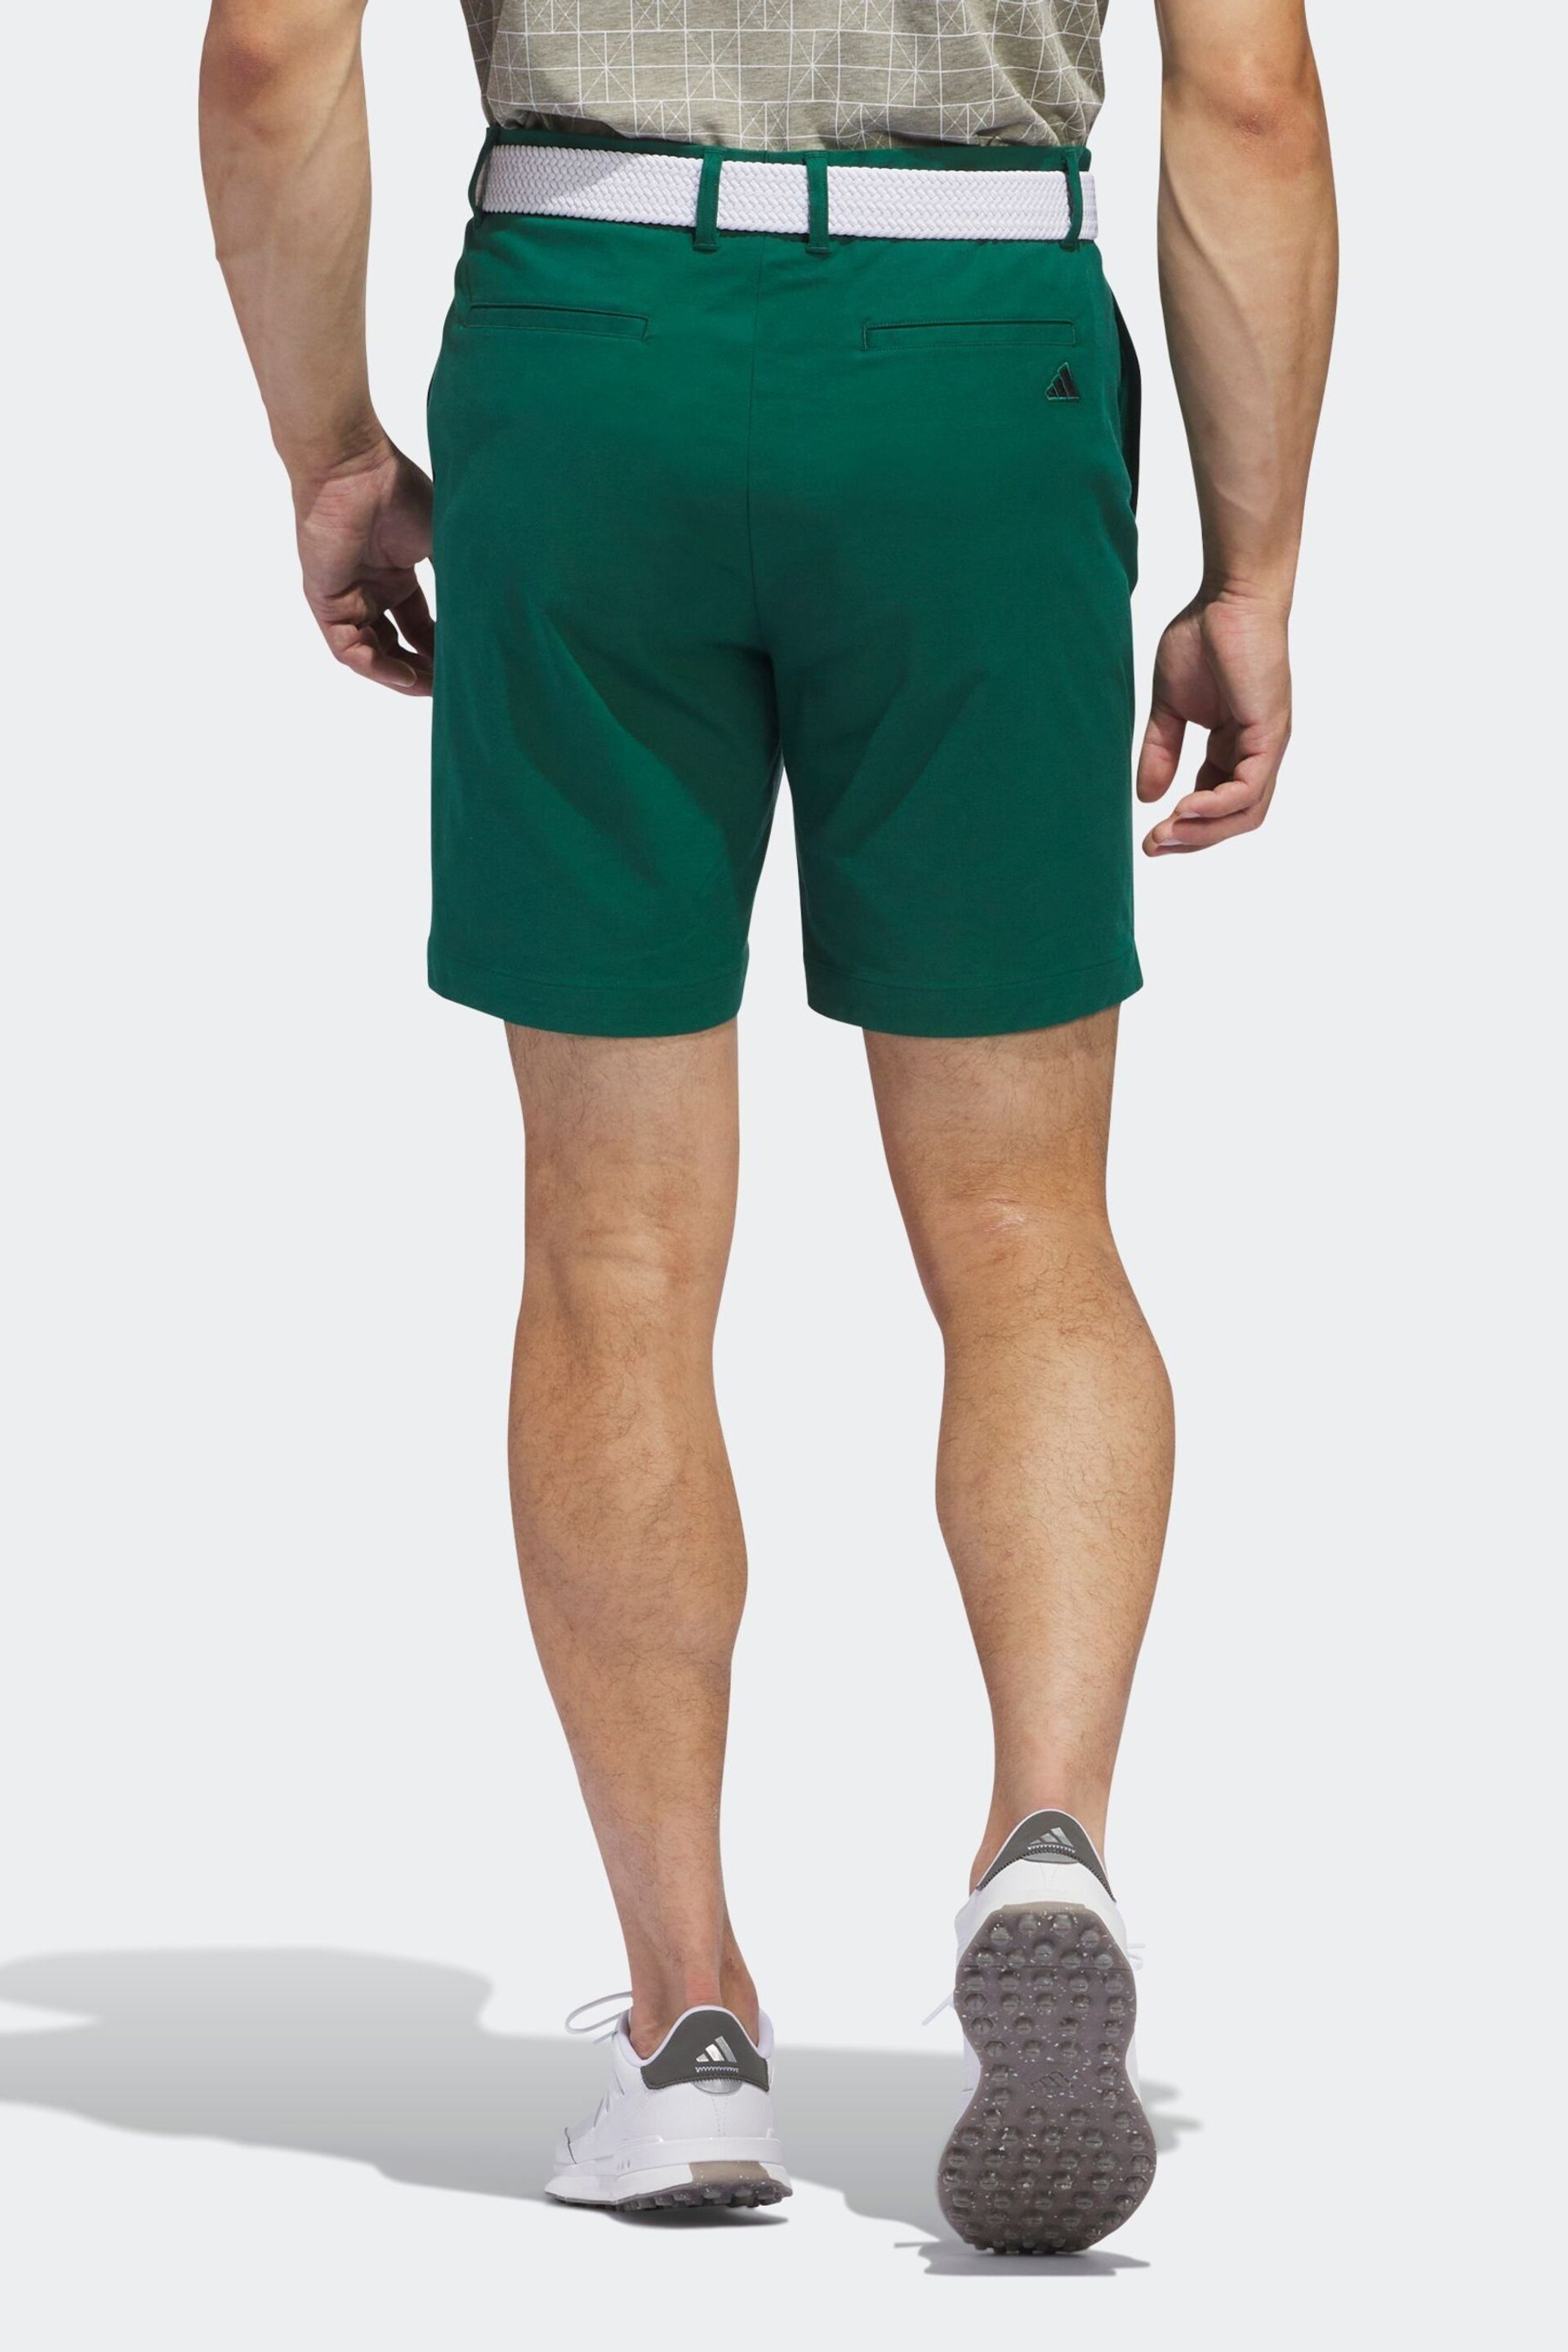 adidas Golf Go To Five Pocket Shorts - Image 2 of 6